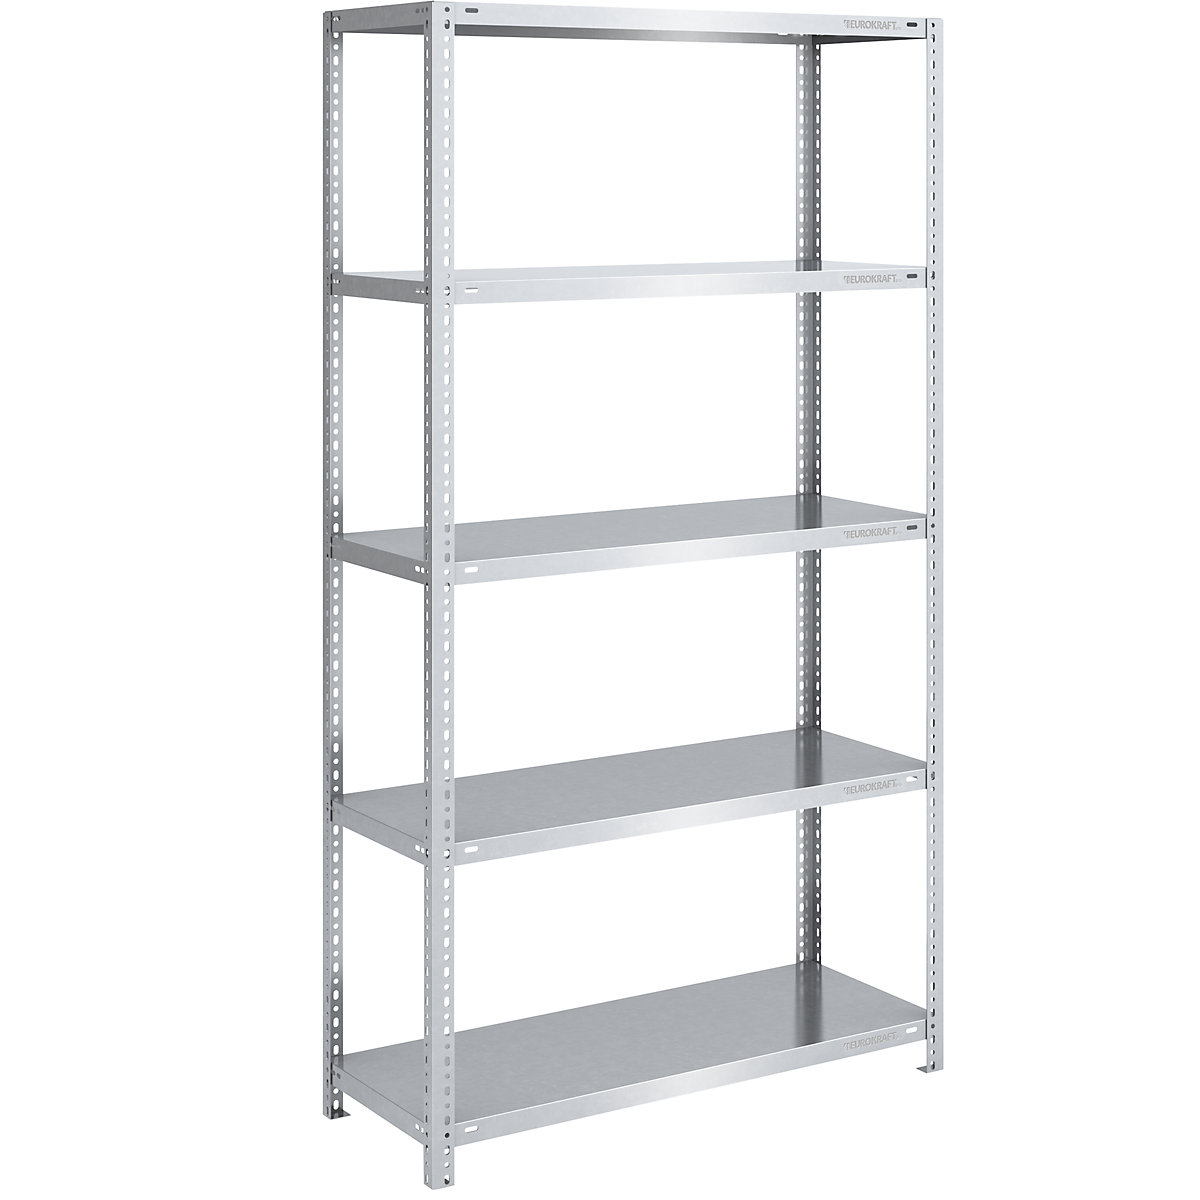 Bolt-together shelf unit, light duty, zinc plated – eurokraft pro, shelf unit height 2000 mm, shelf width 1000 mm, depth 500 mm, standard shelf unit-10